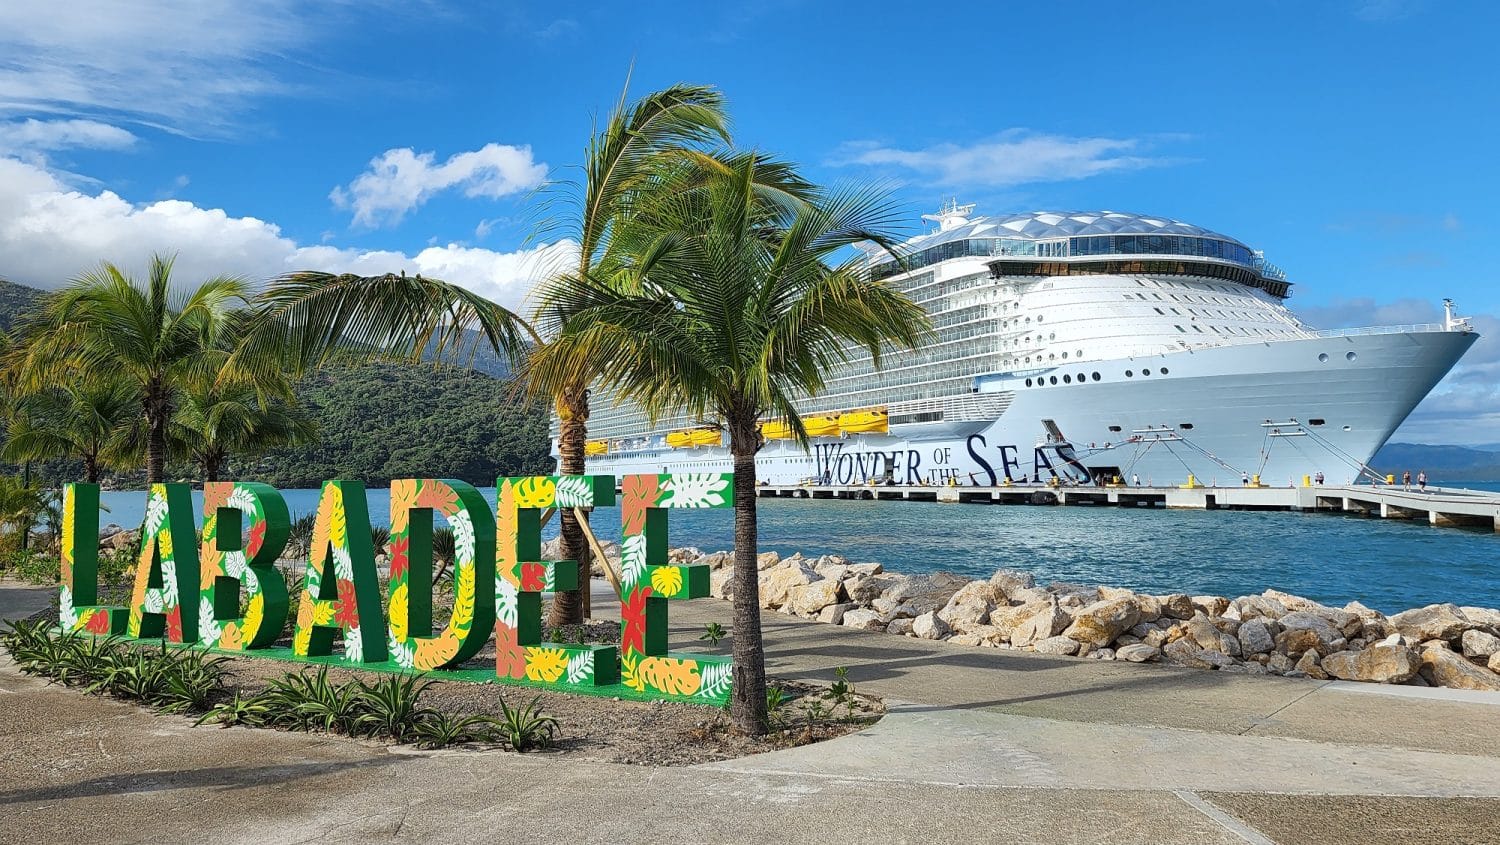 Labadee haiti cruise ship